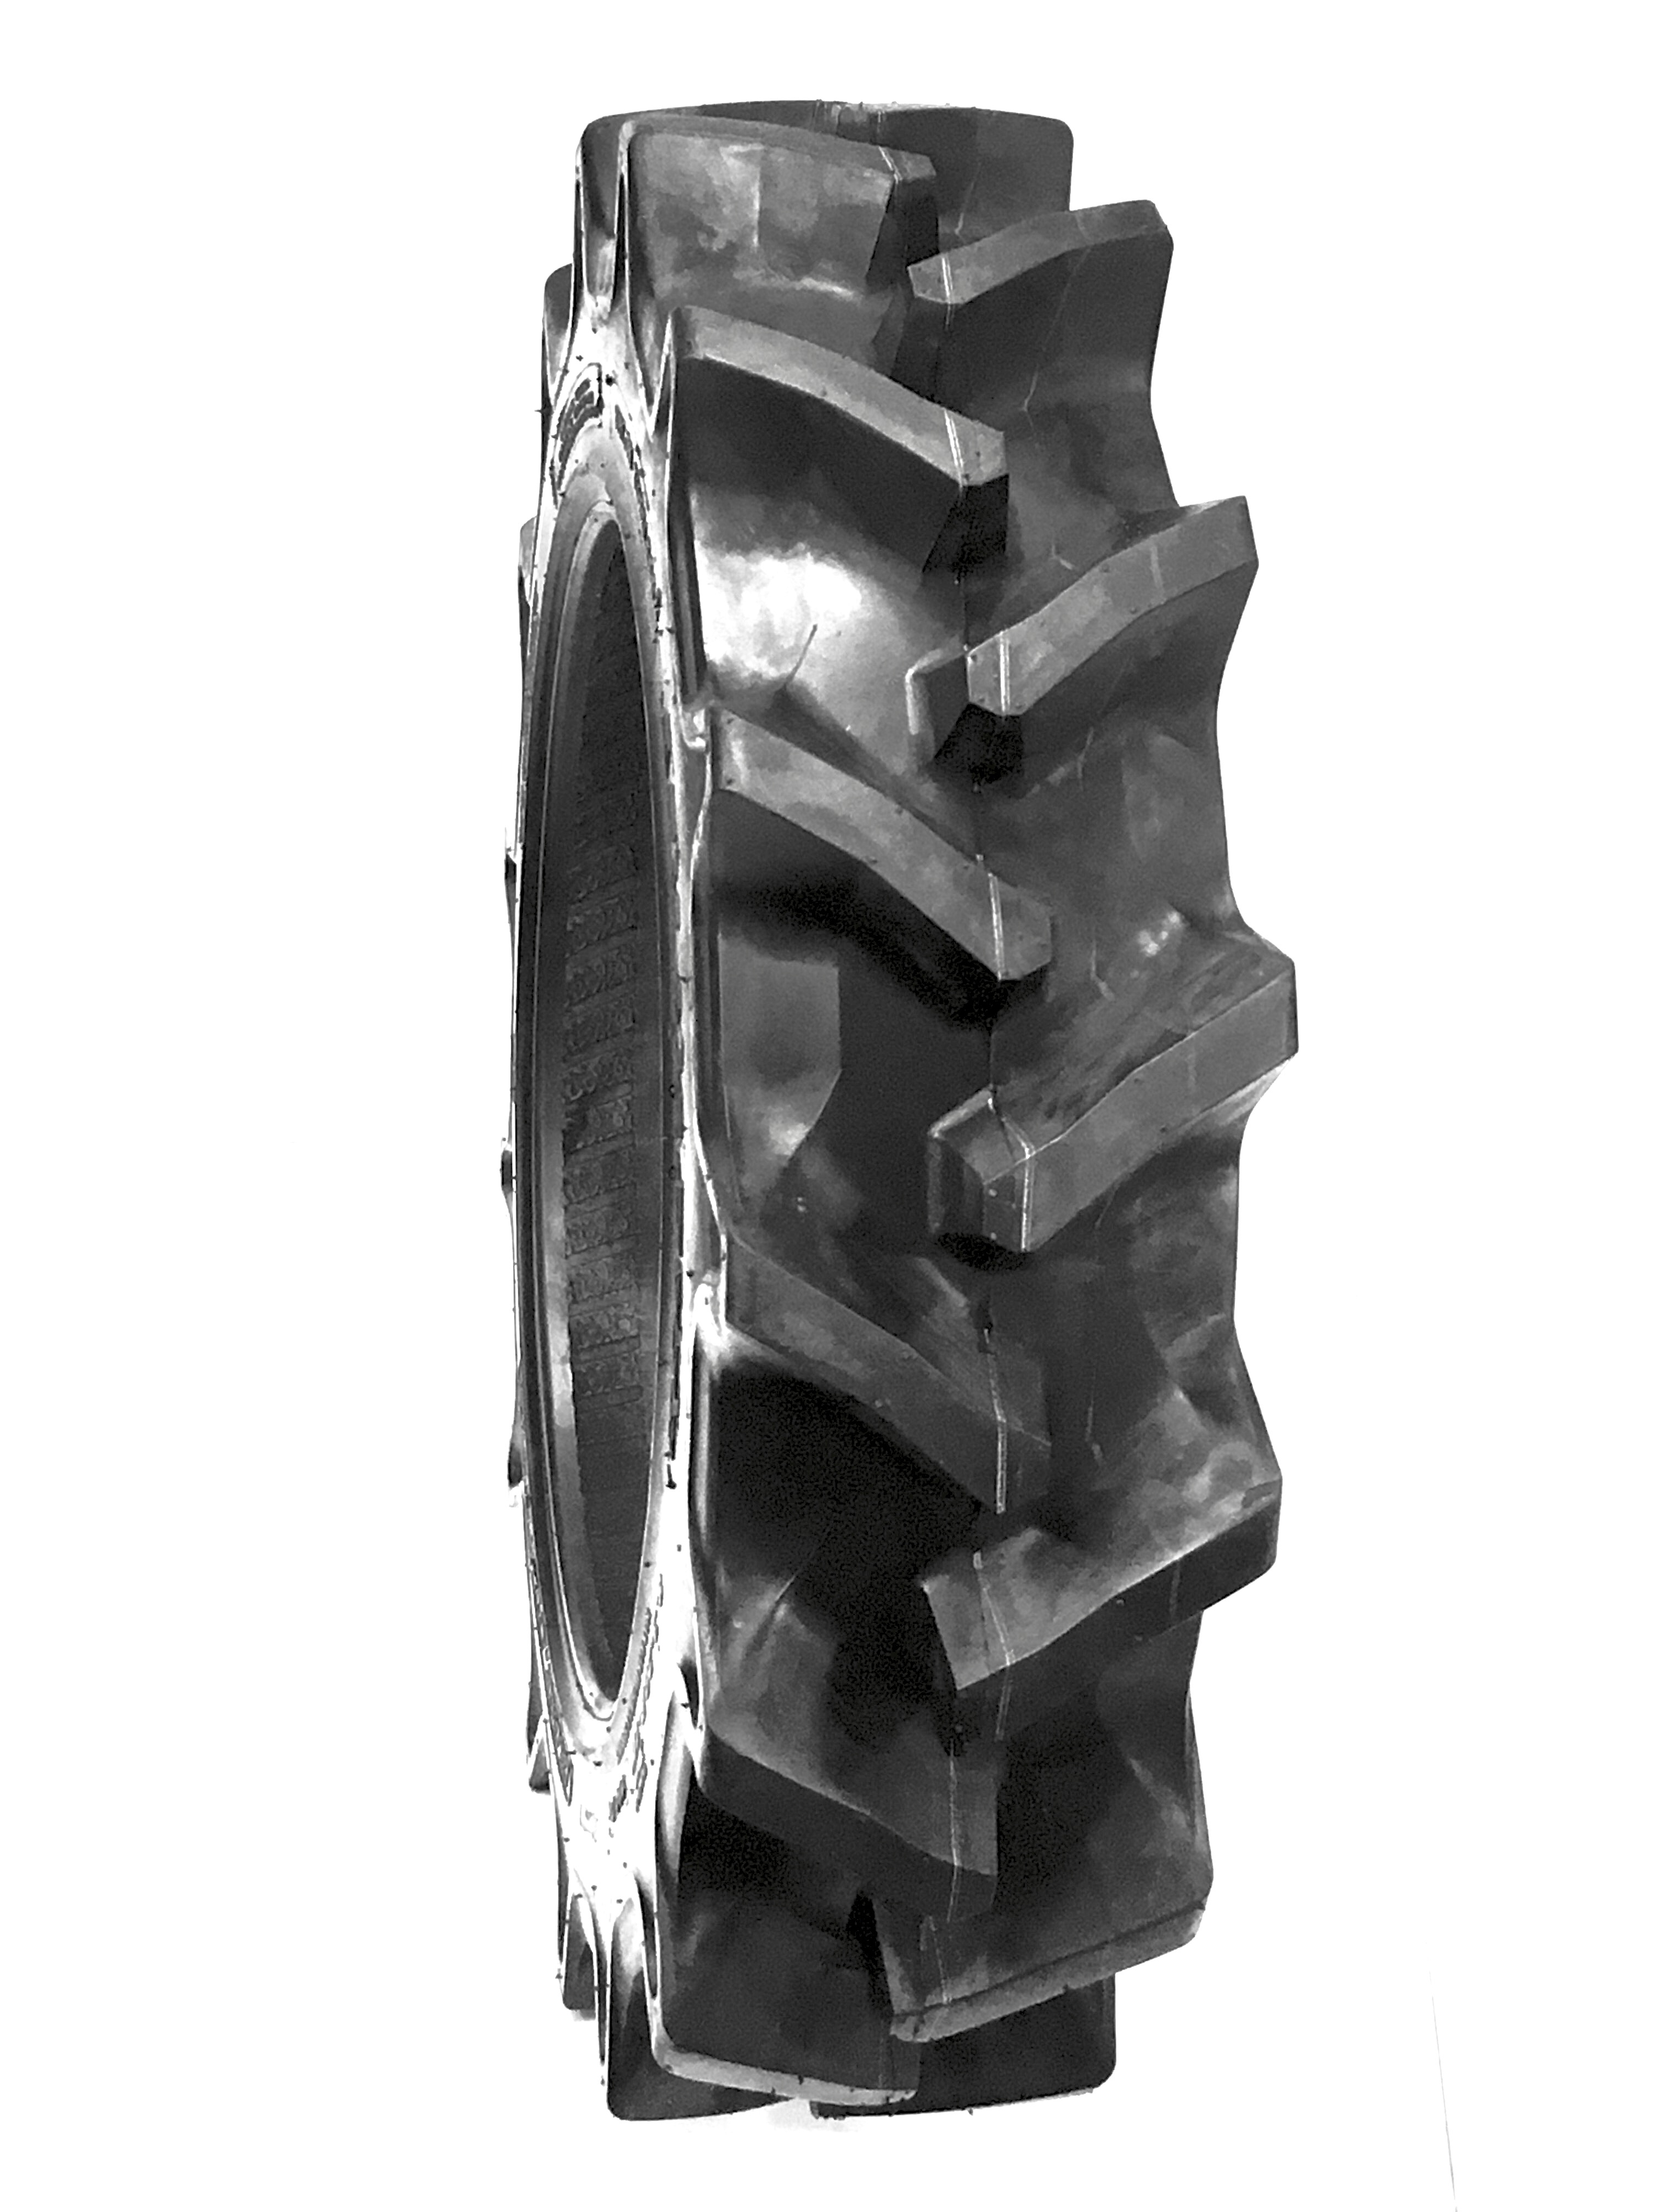 4 New Otr Blackstone - 8.3x--20 Tires 83020 8.3 1 20.